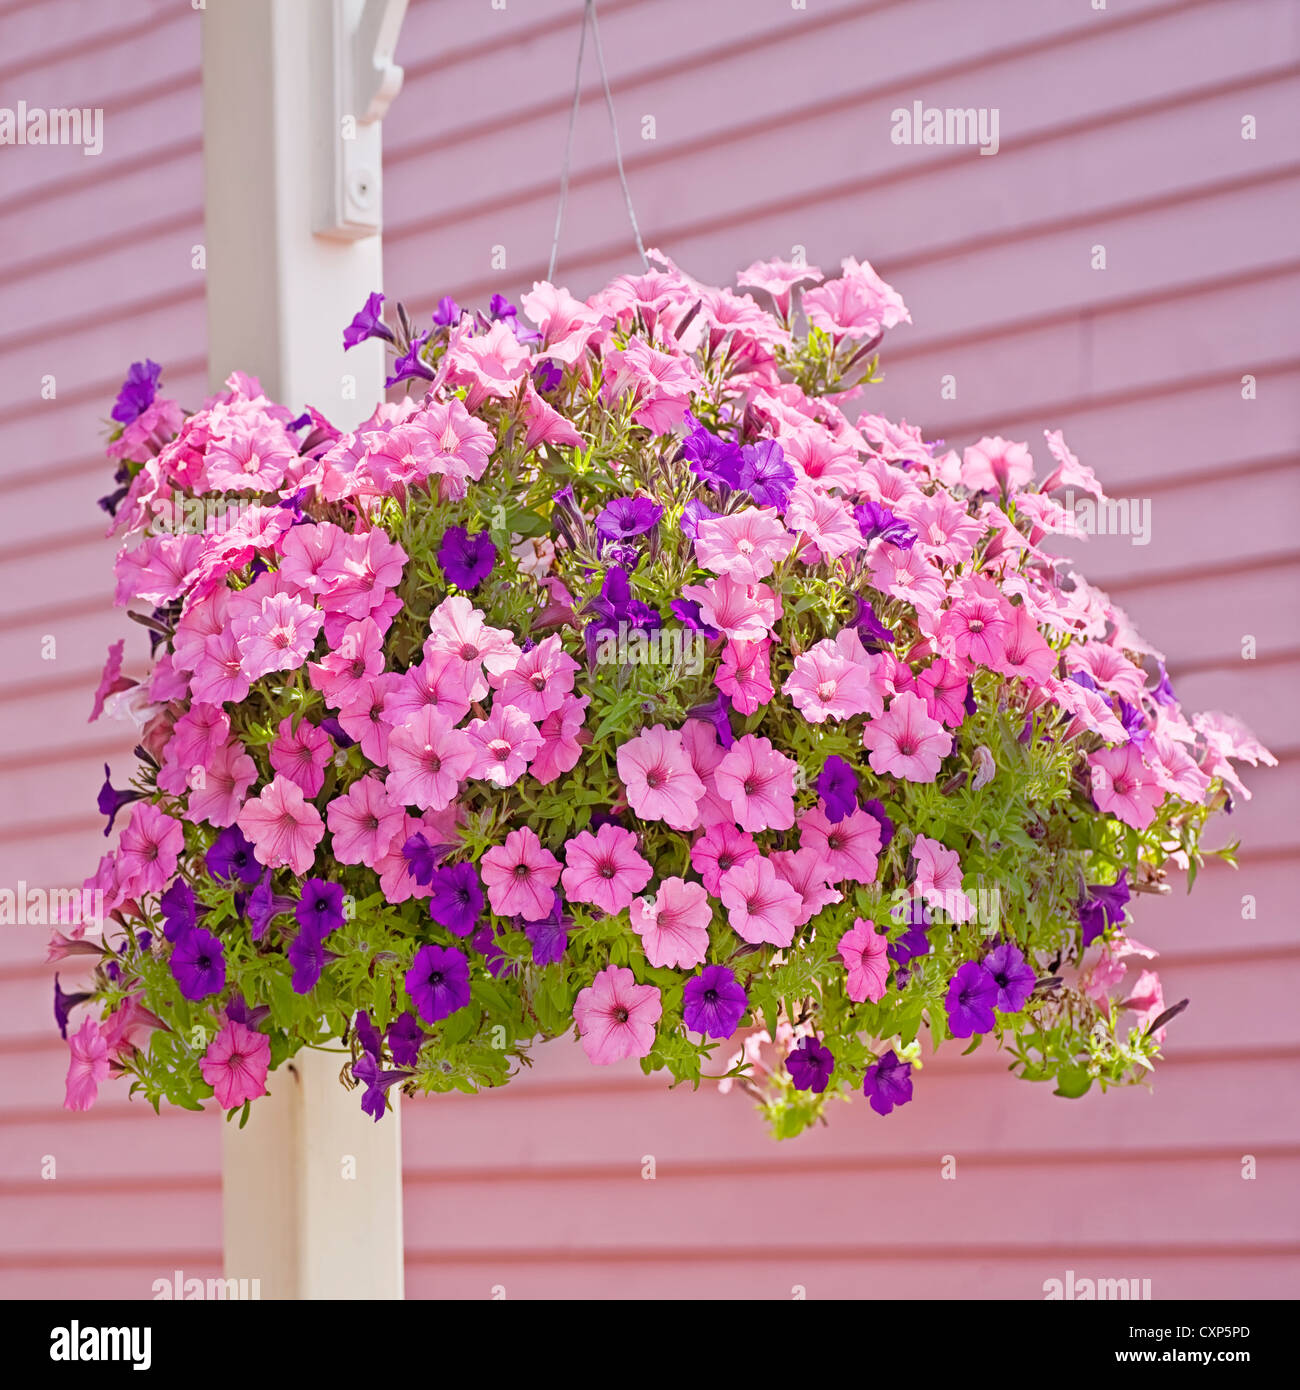 Hanging basket of pink and purple petunias. Stock Photo